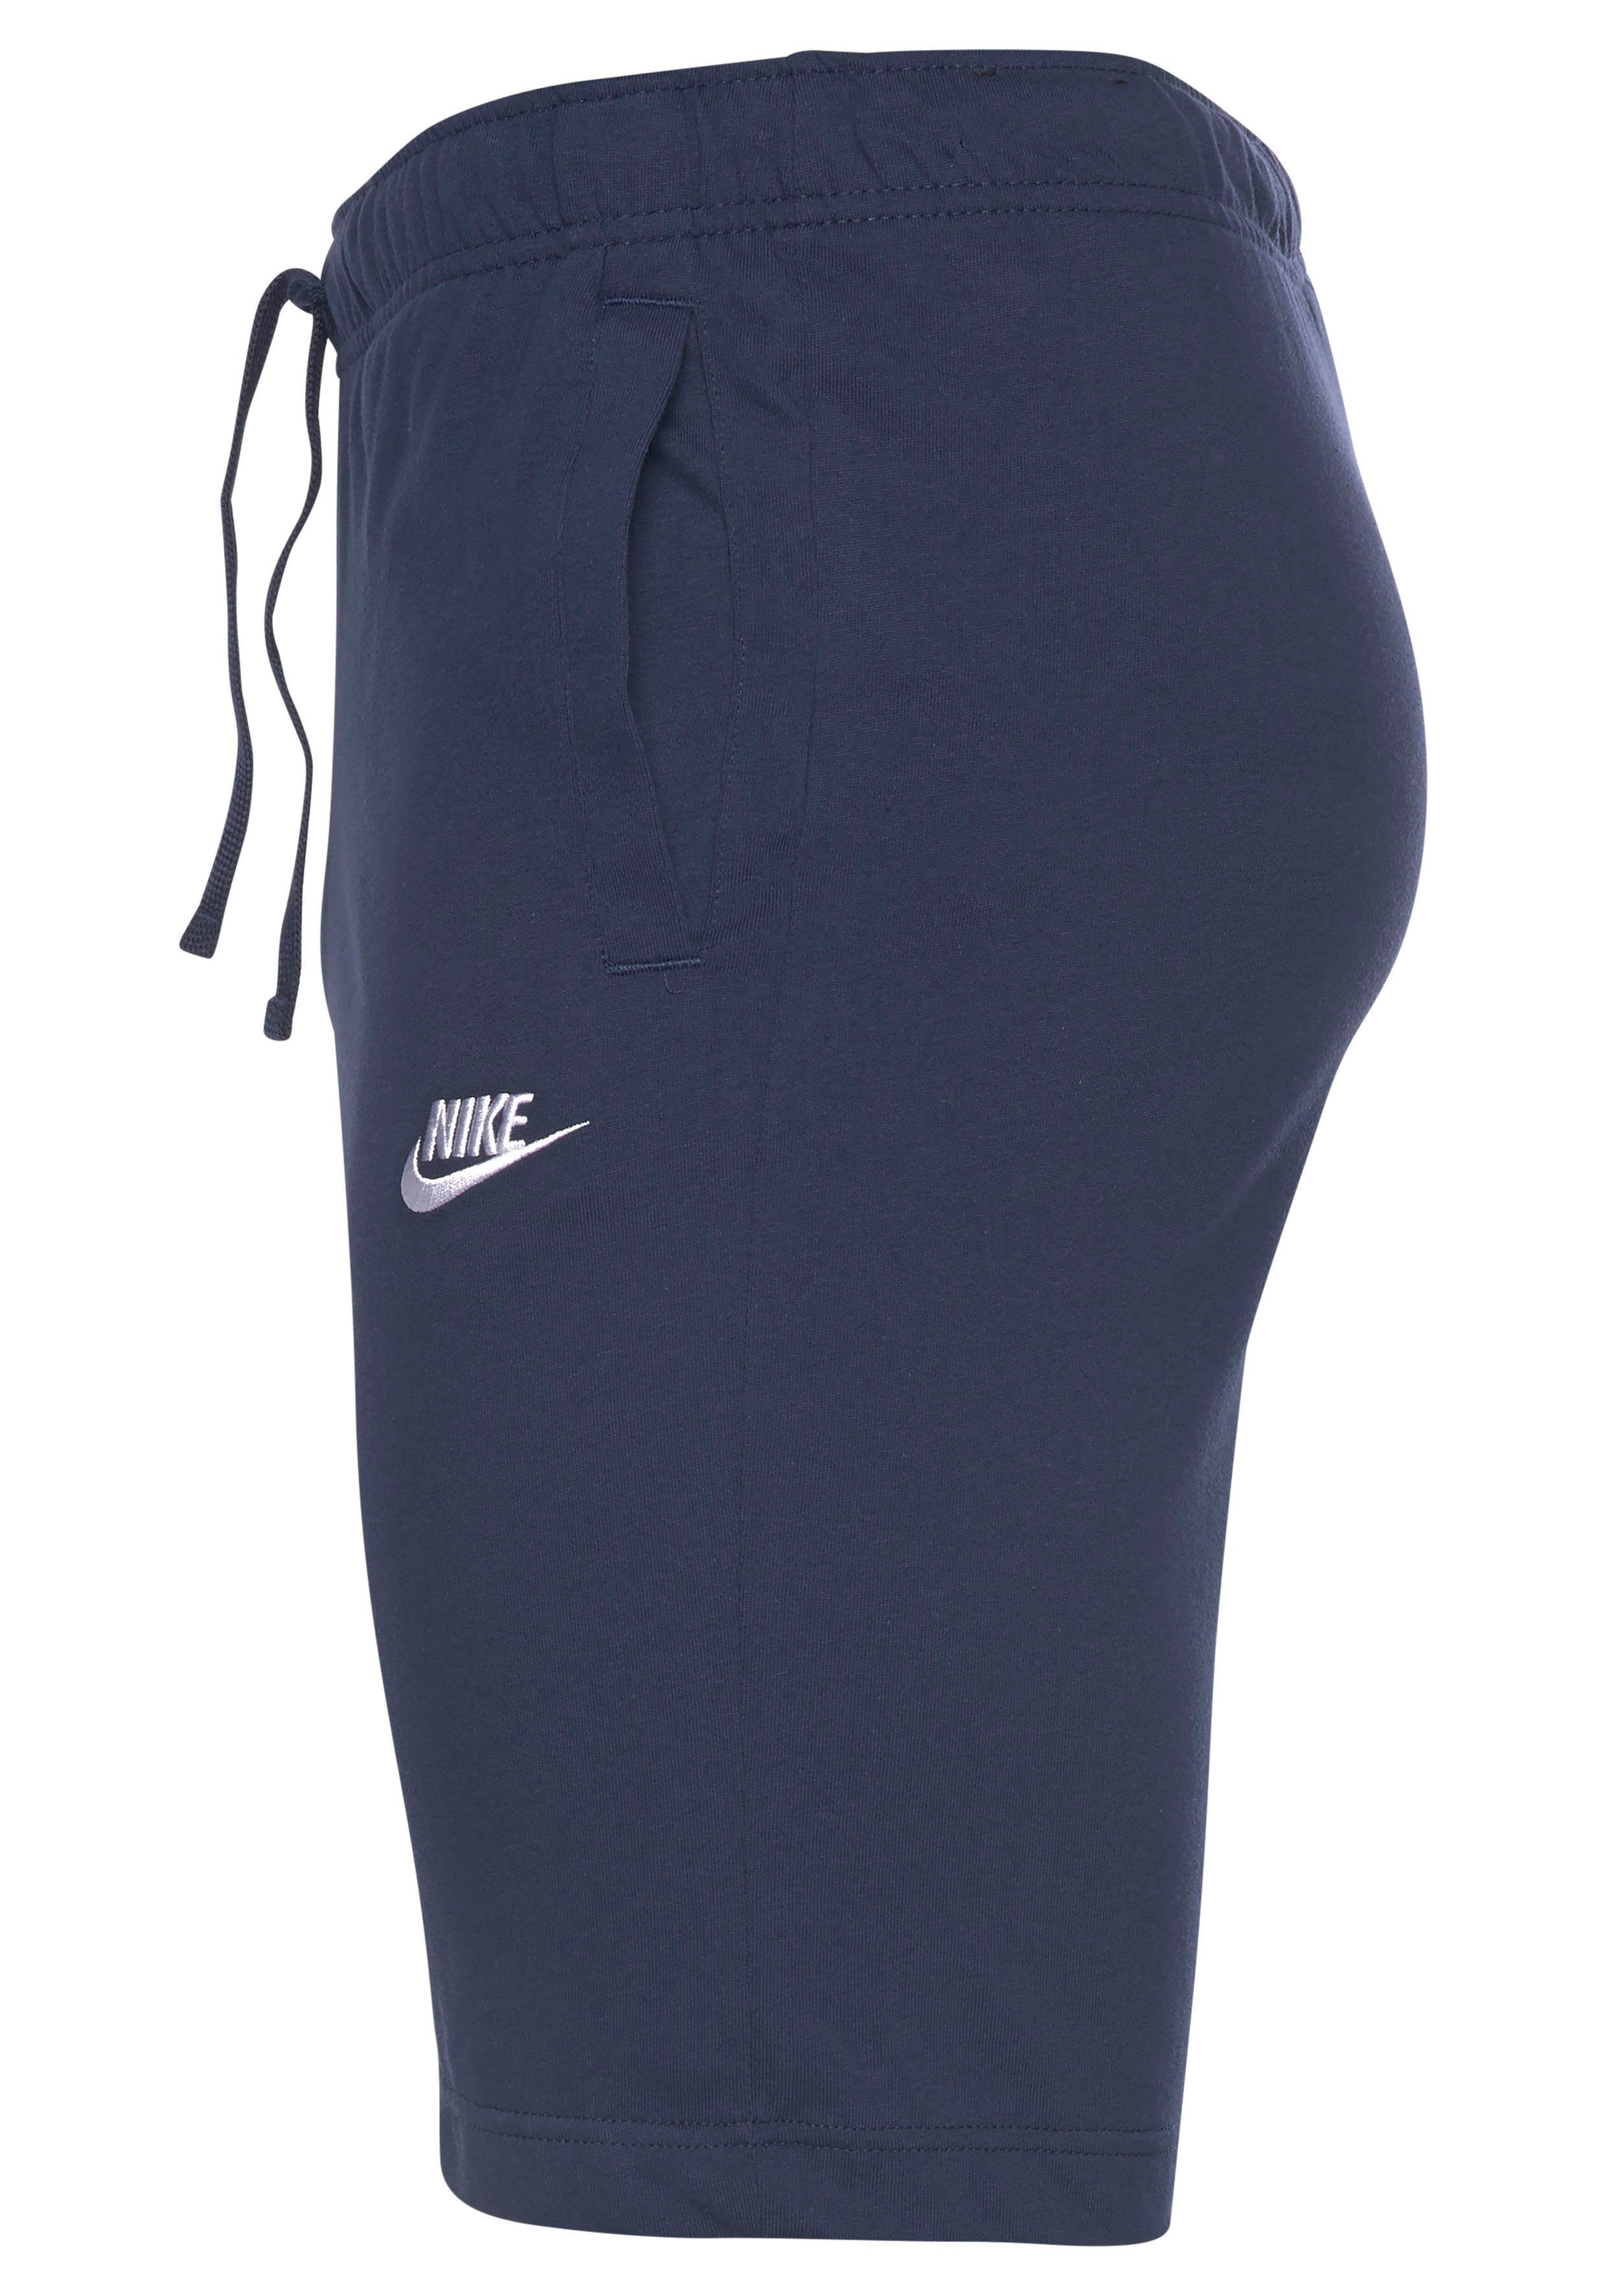 Club Shorts Sportswear marine Nike Shorts Men's